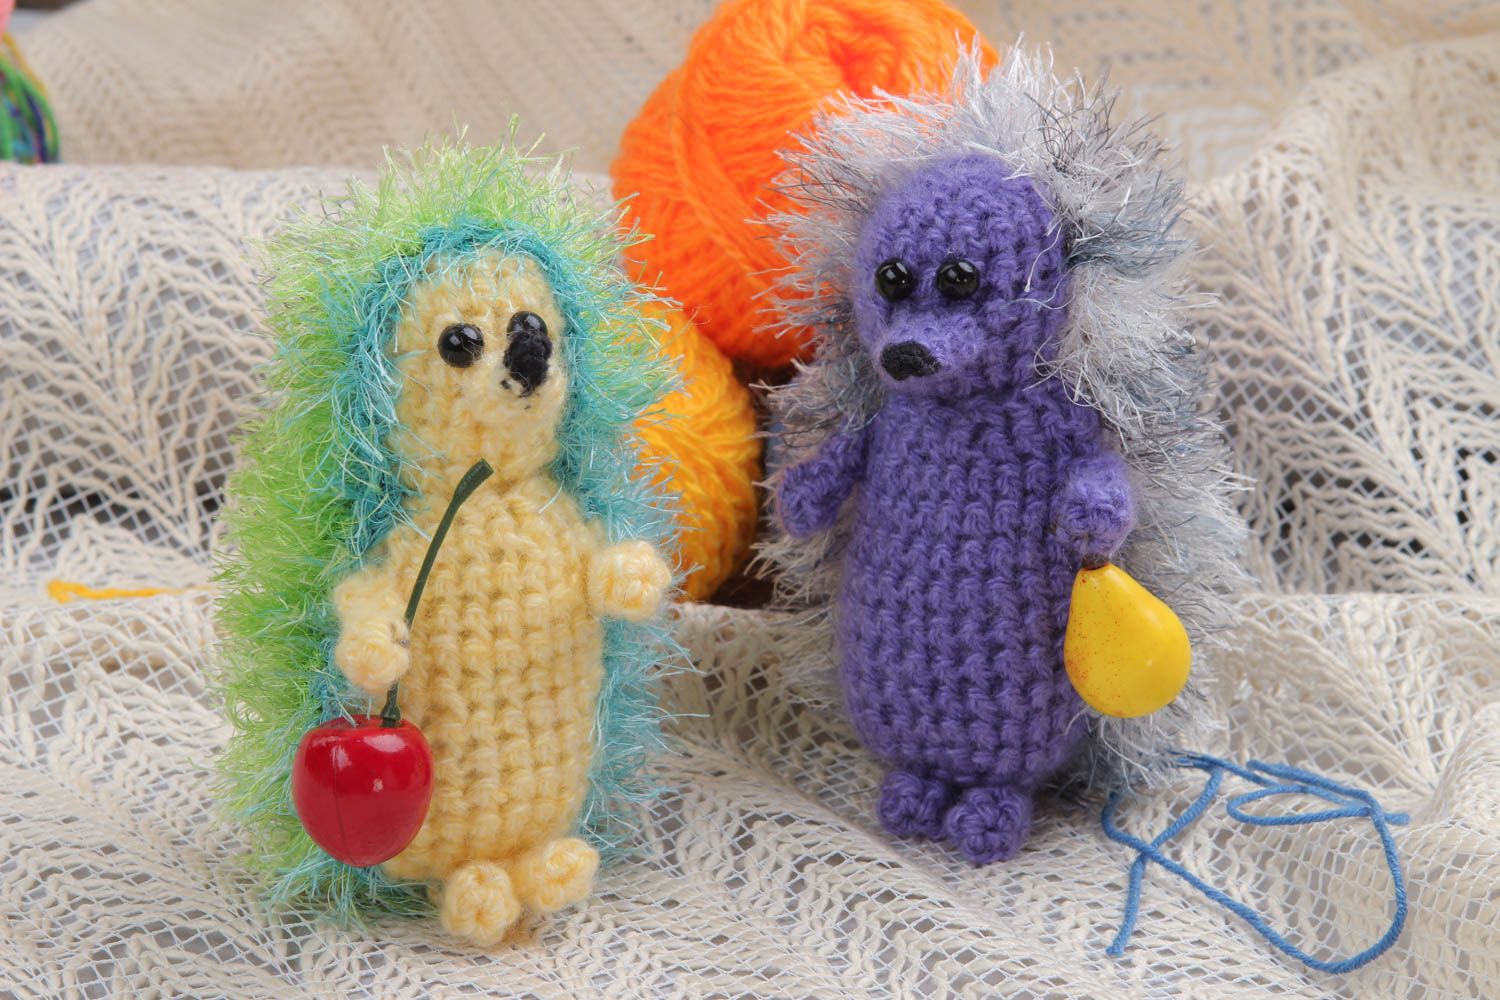 Handmade crocheted toys 2 hedgehogs figurines designer interior toy present photo 1